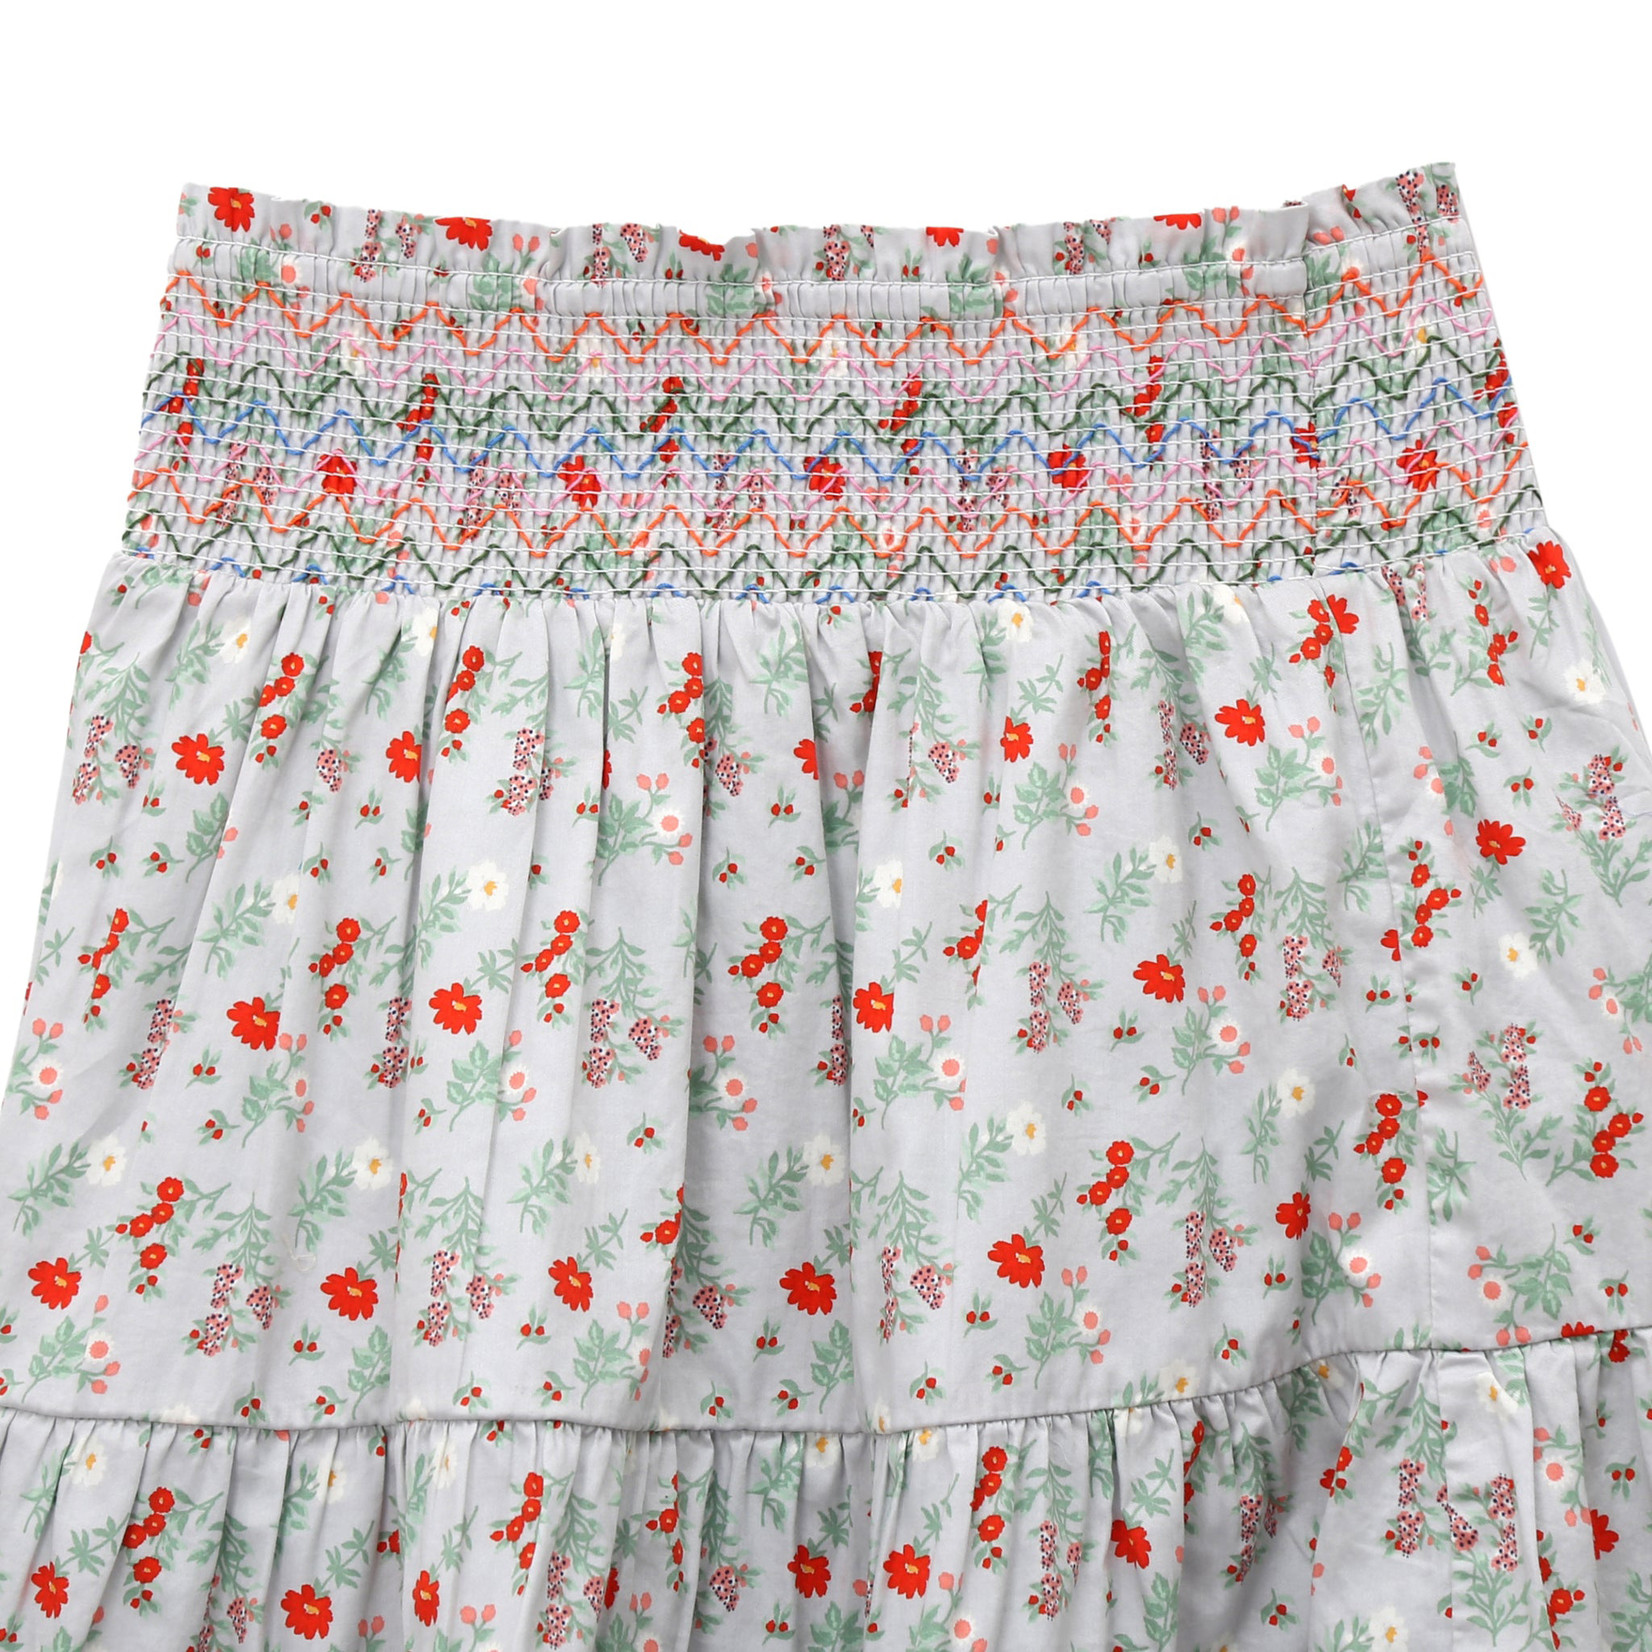 Peek Aren't You Curious Floral Pixie Skirt